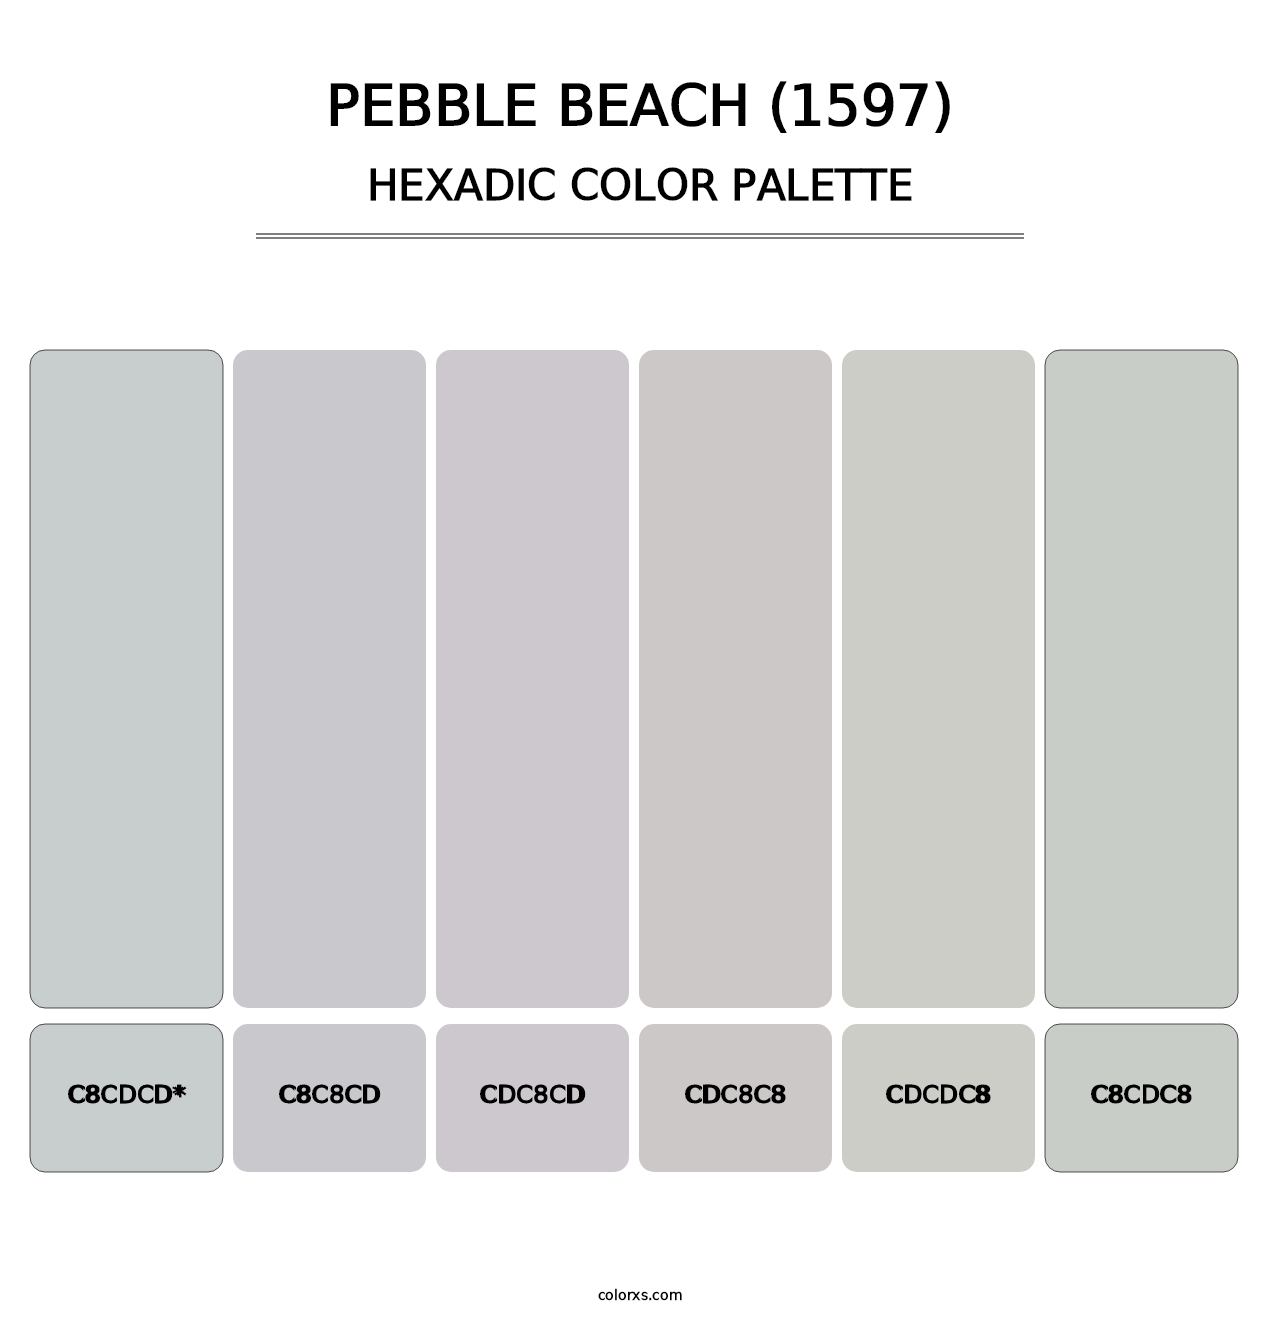 Pebble Beach (1597) - Hexadic Color Palette